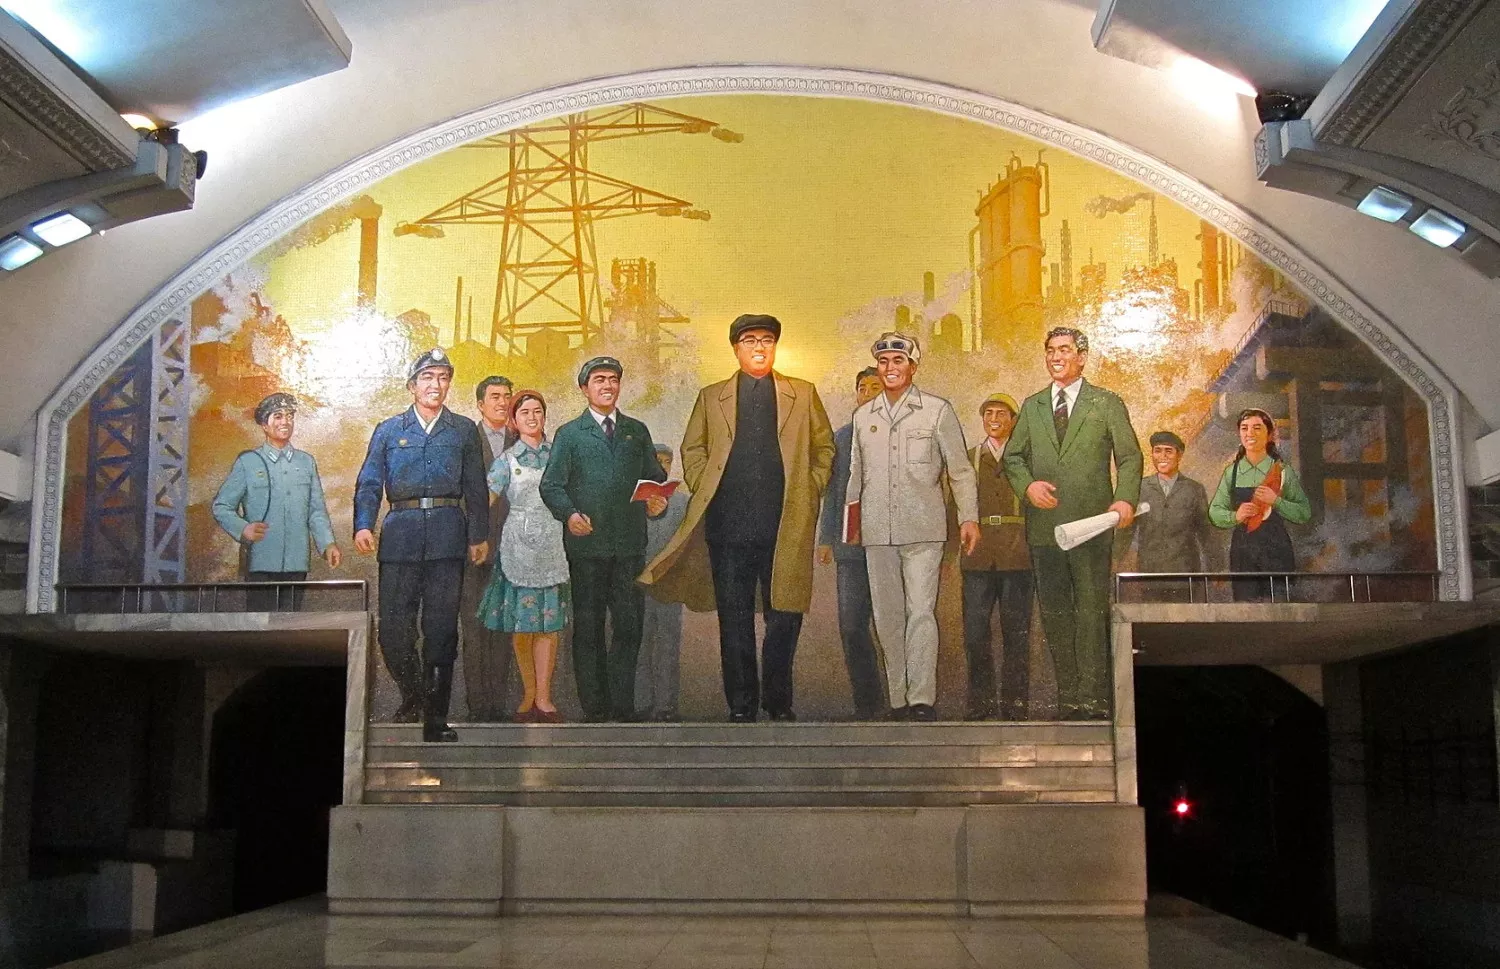 Mural 'The Great Leader Comrade Kim Il Sung Among Workers' - Puhung Metro Station - 부흥역 - Pyongyang - North Korea